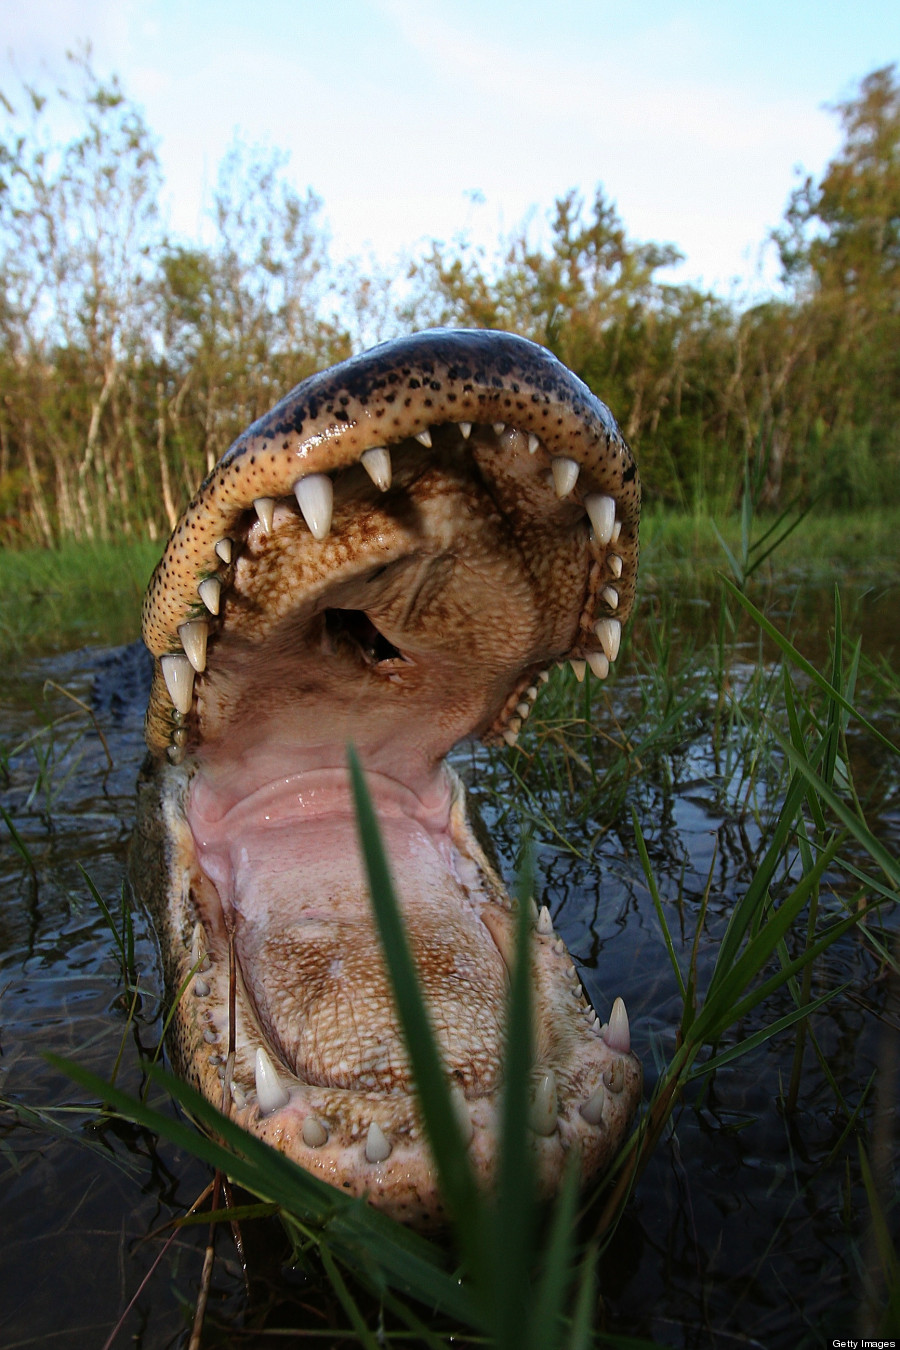 Do alligators have tongues?